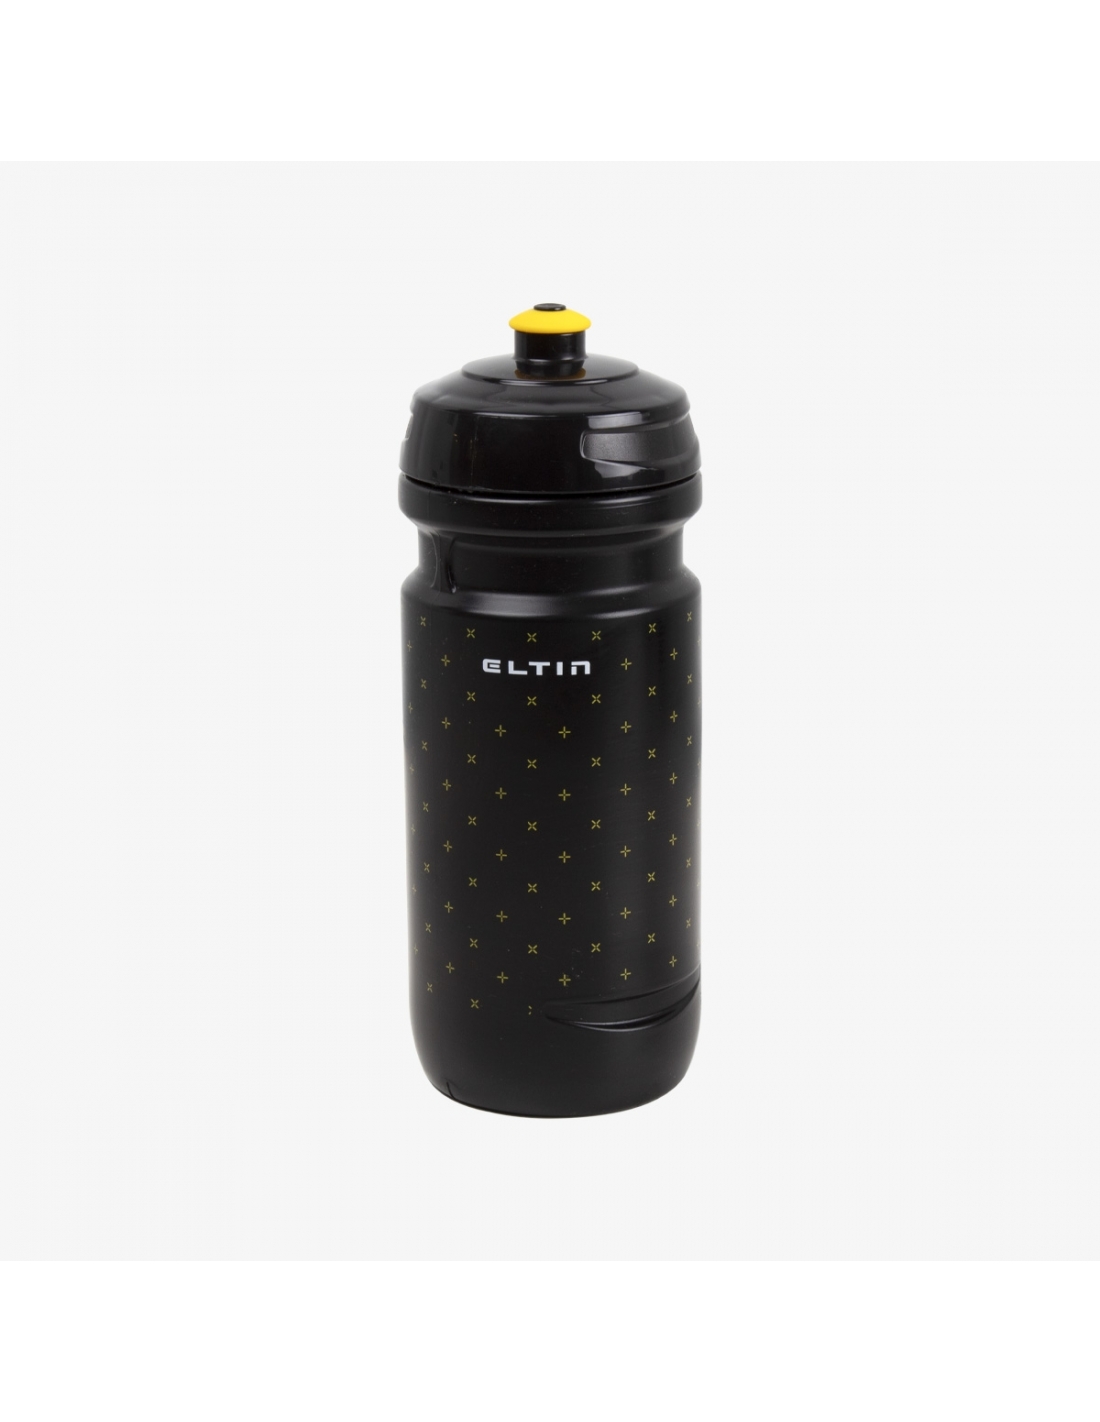 Eltin cycling bottle 600ml black and yellow